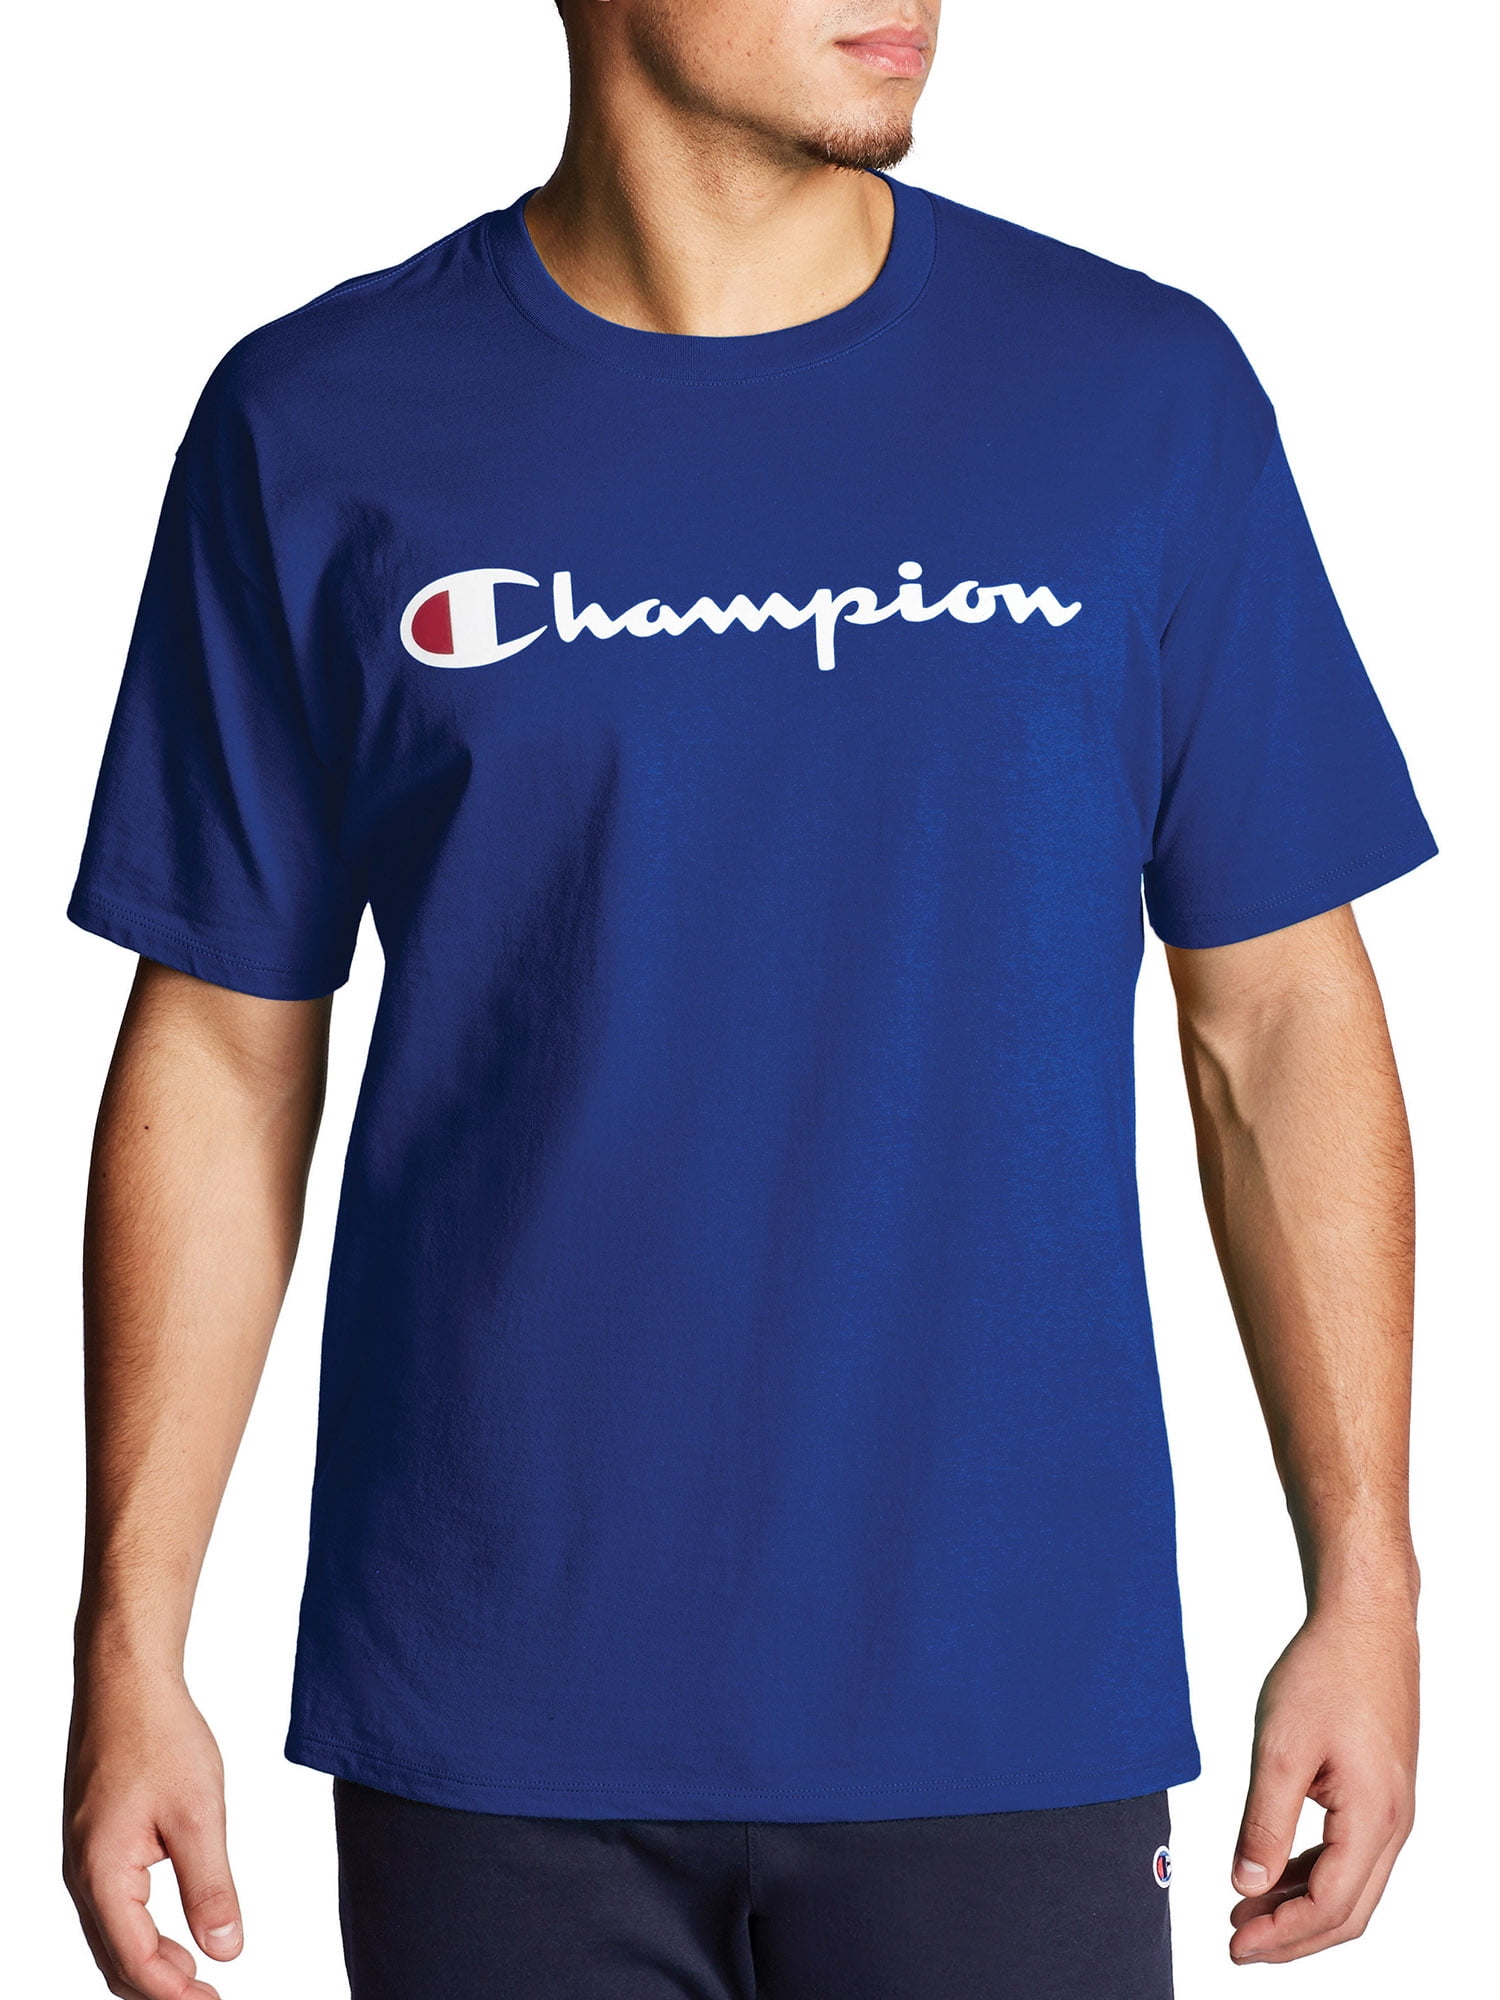 Champion CLOSED BOTTOM EVERYDAY COTTON PANT - Walmart.com